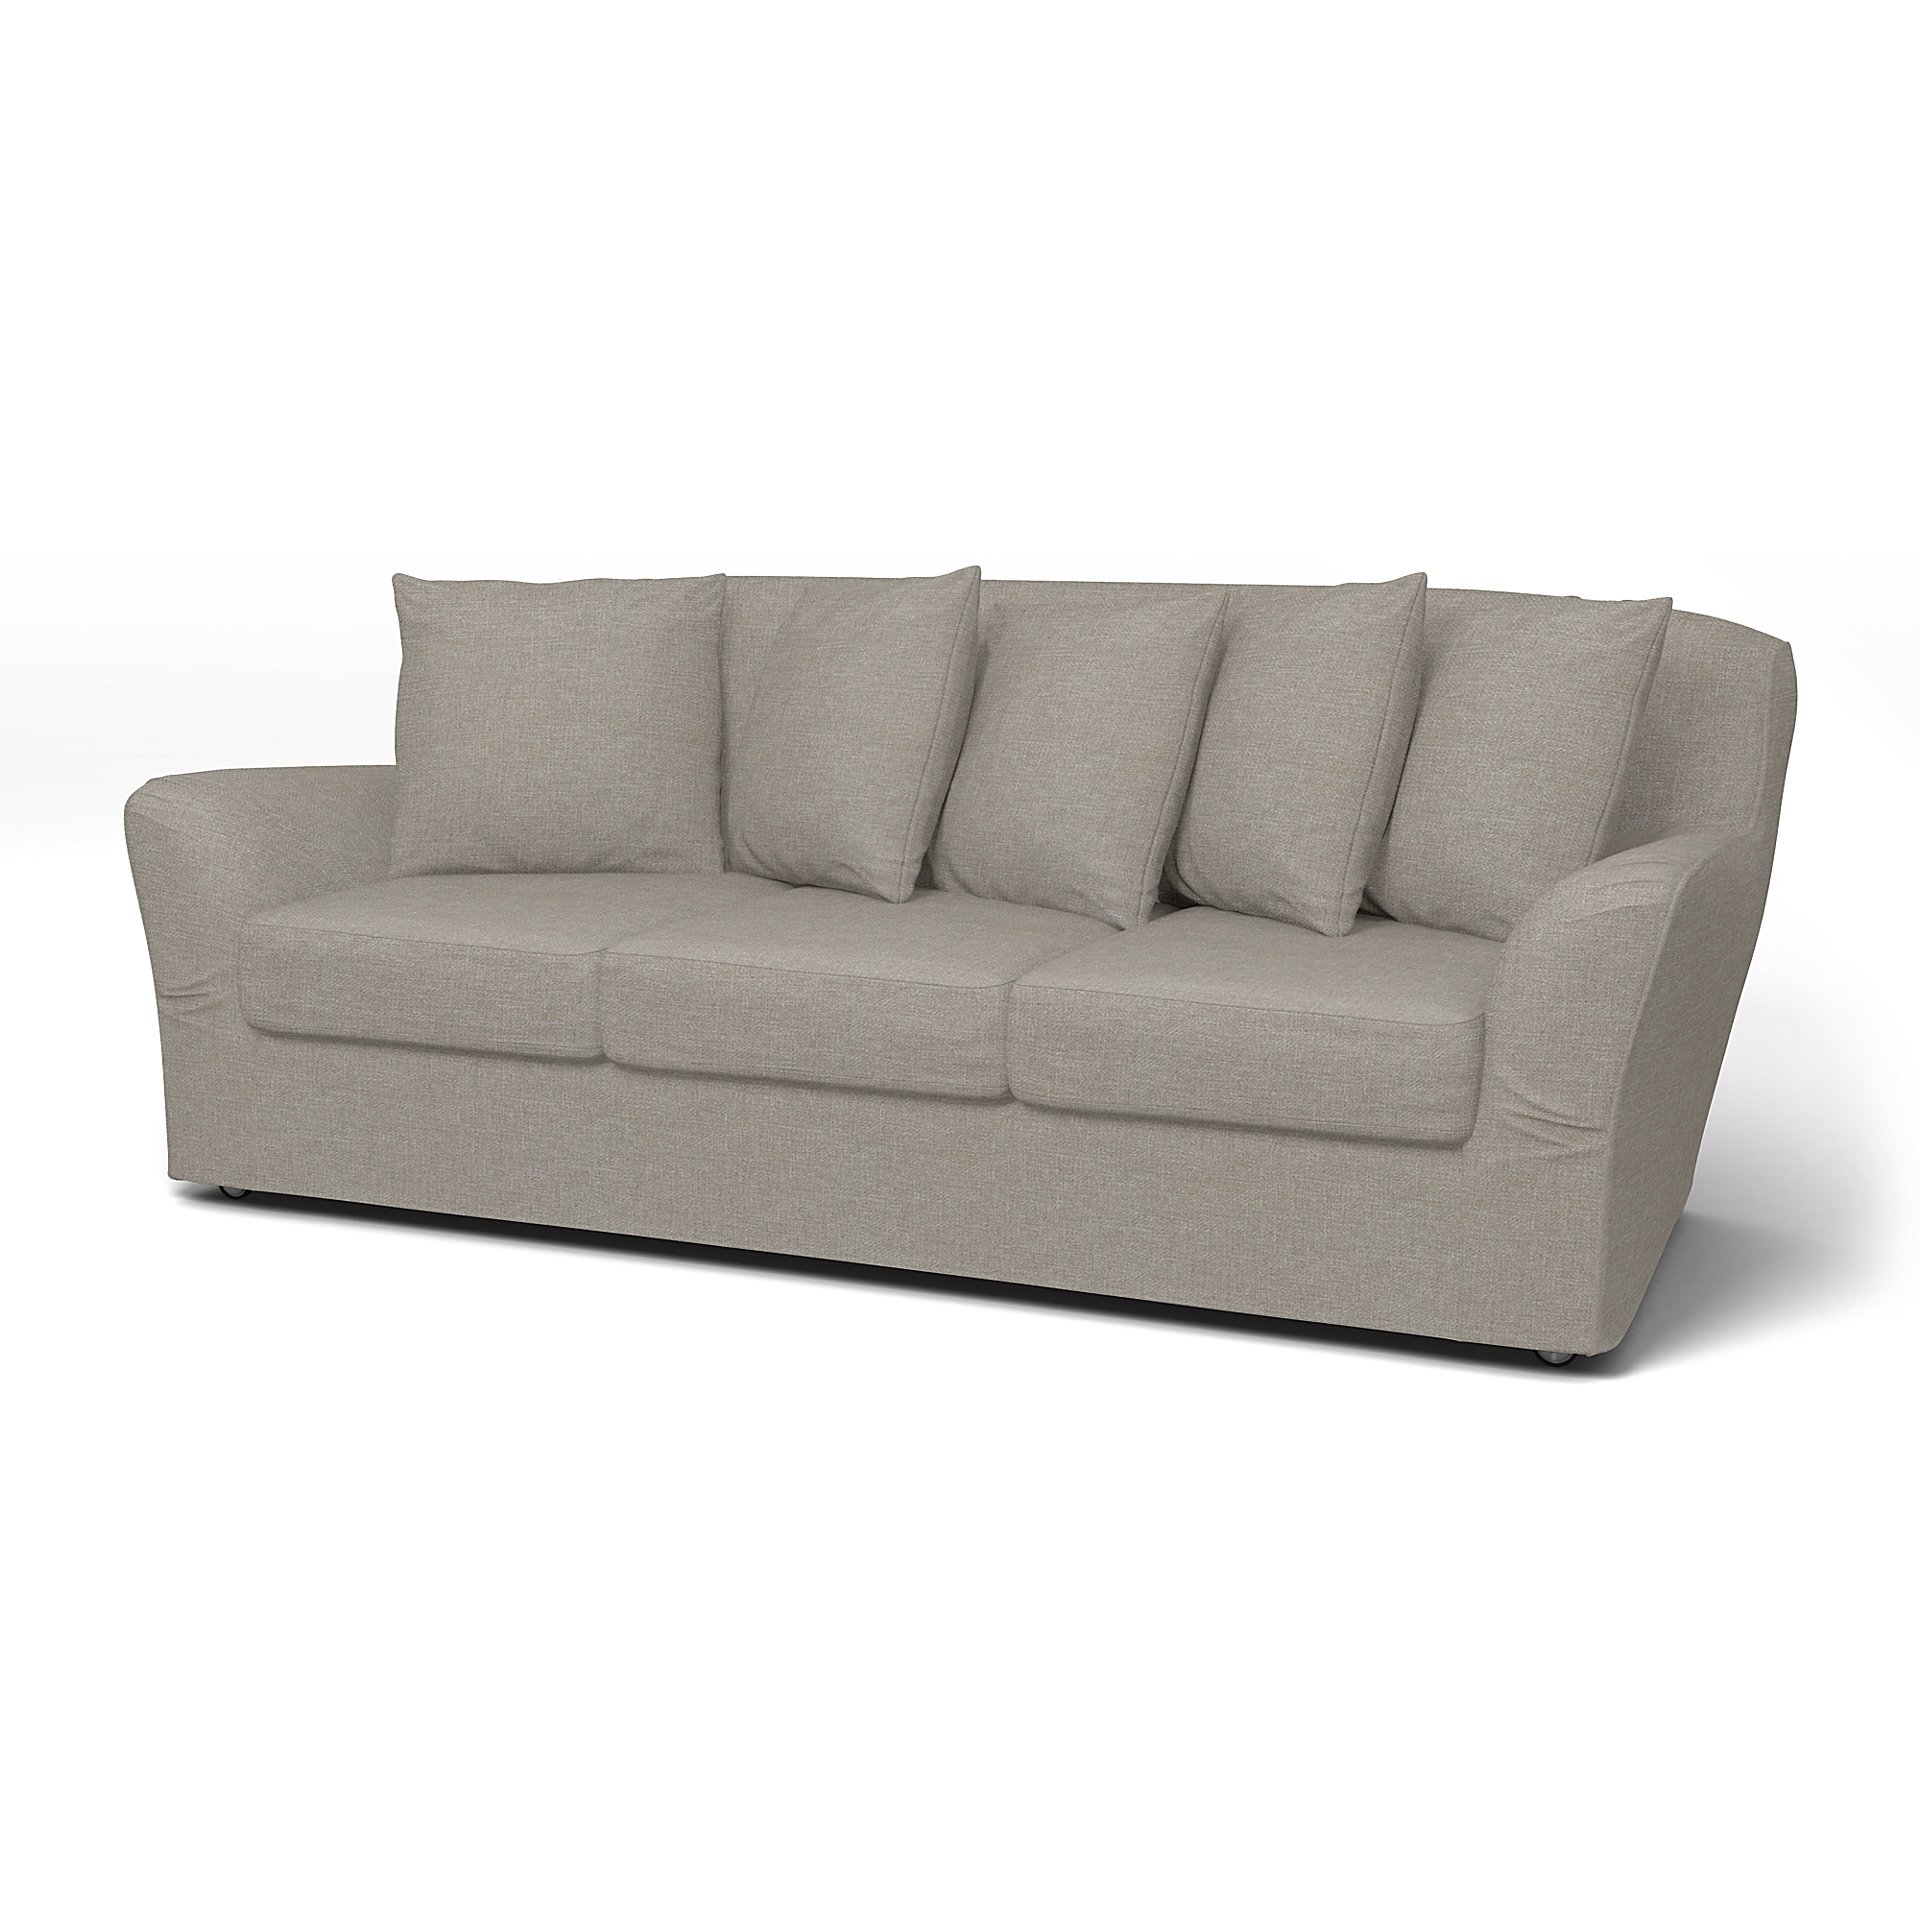 IKEA - Tomelilla 3 seater sofa, Greige, Boucle & Texture - Bemz